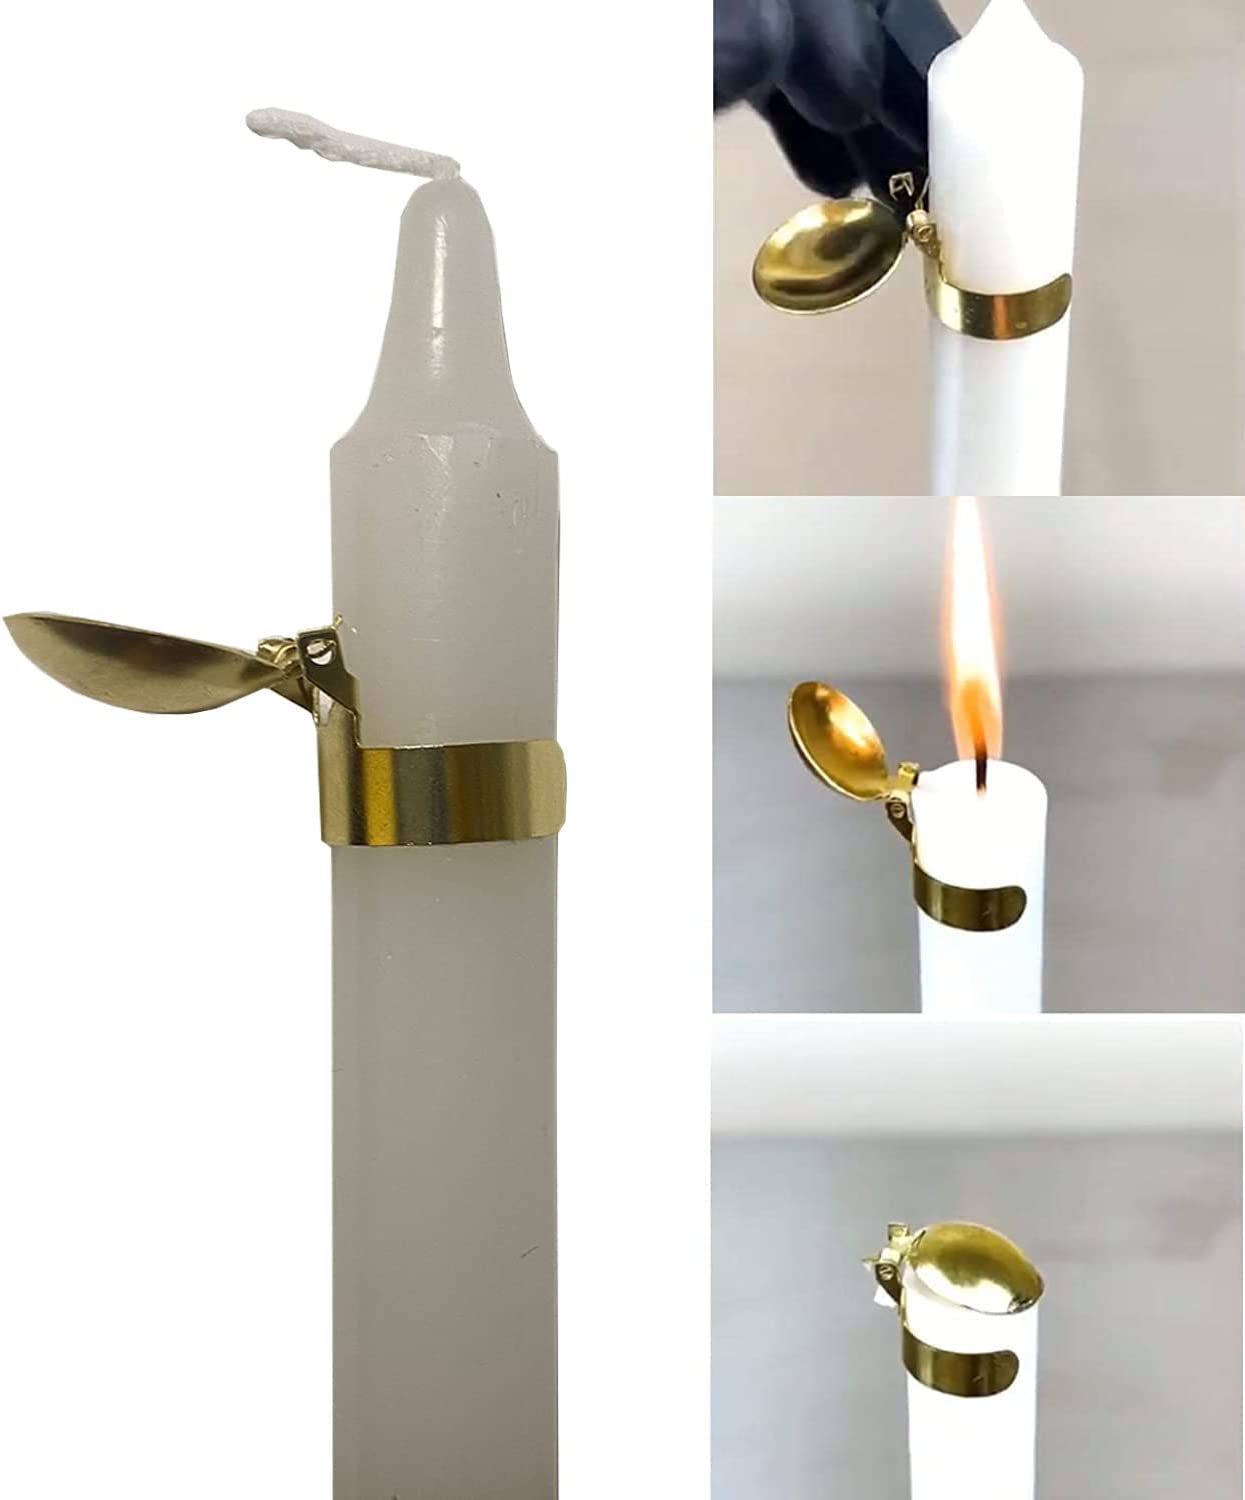 🔥Automatic Candle Extinguisher / Vintage Candle Decor